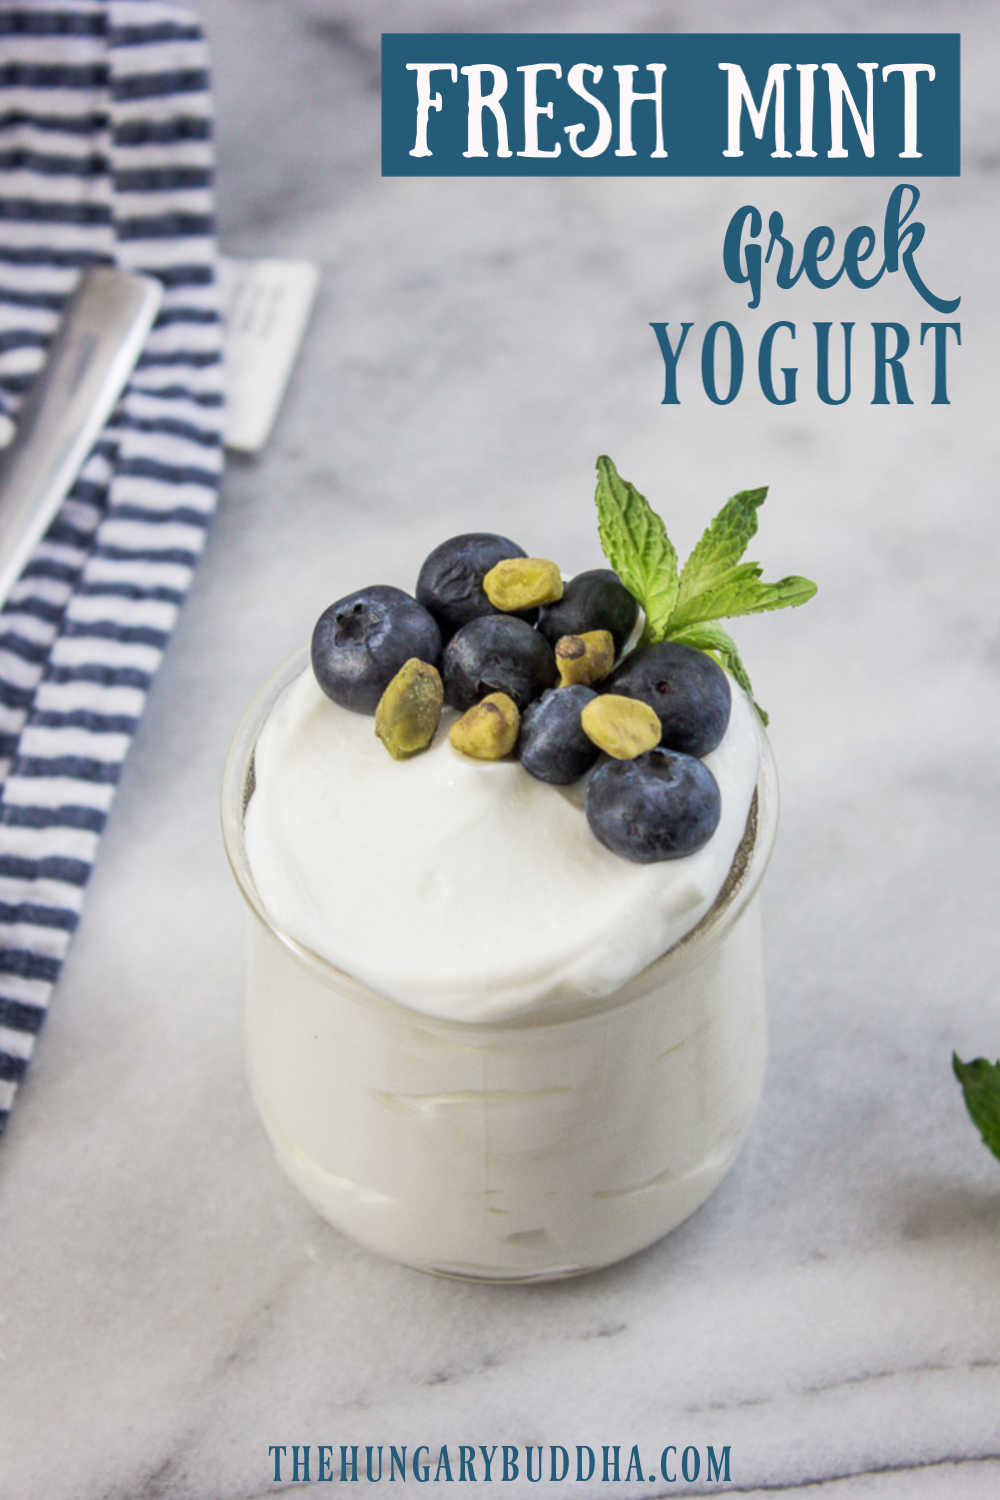 fresh mint greek yogurt - The Hungary Buddha Eats the World